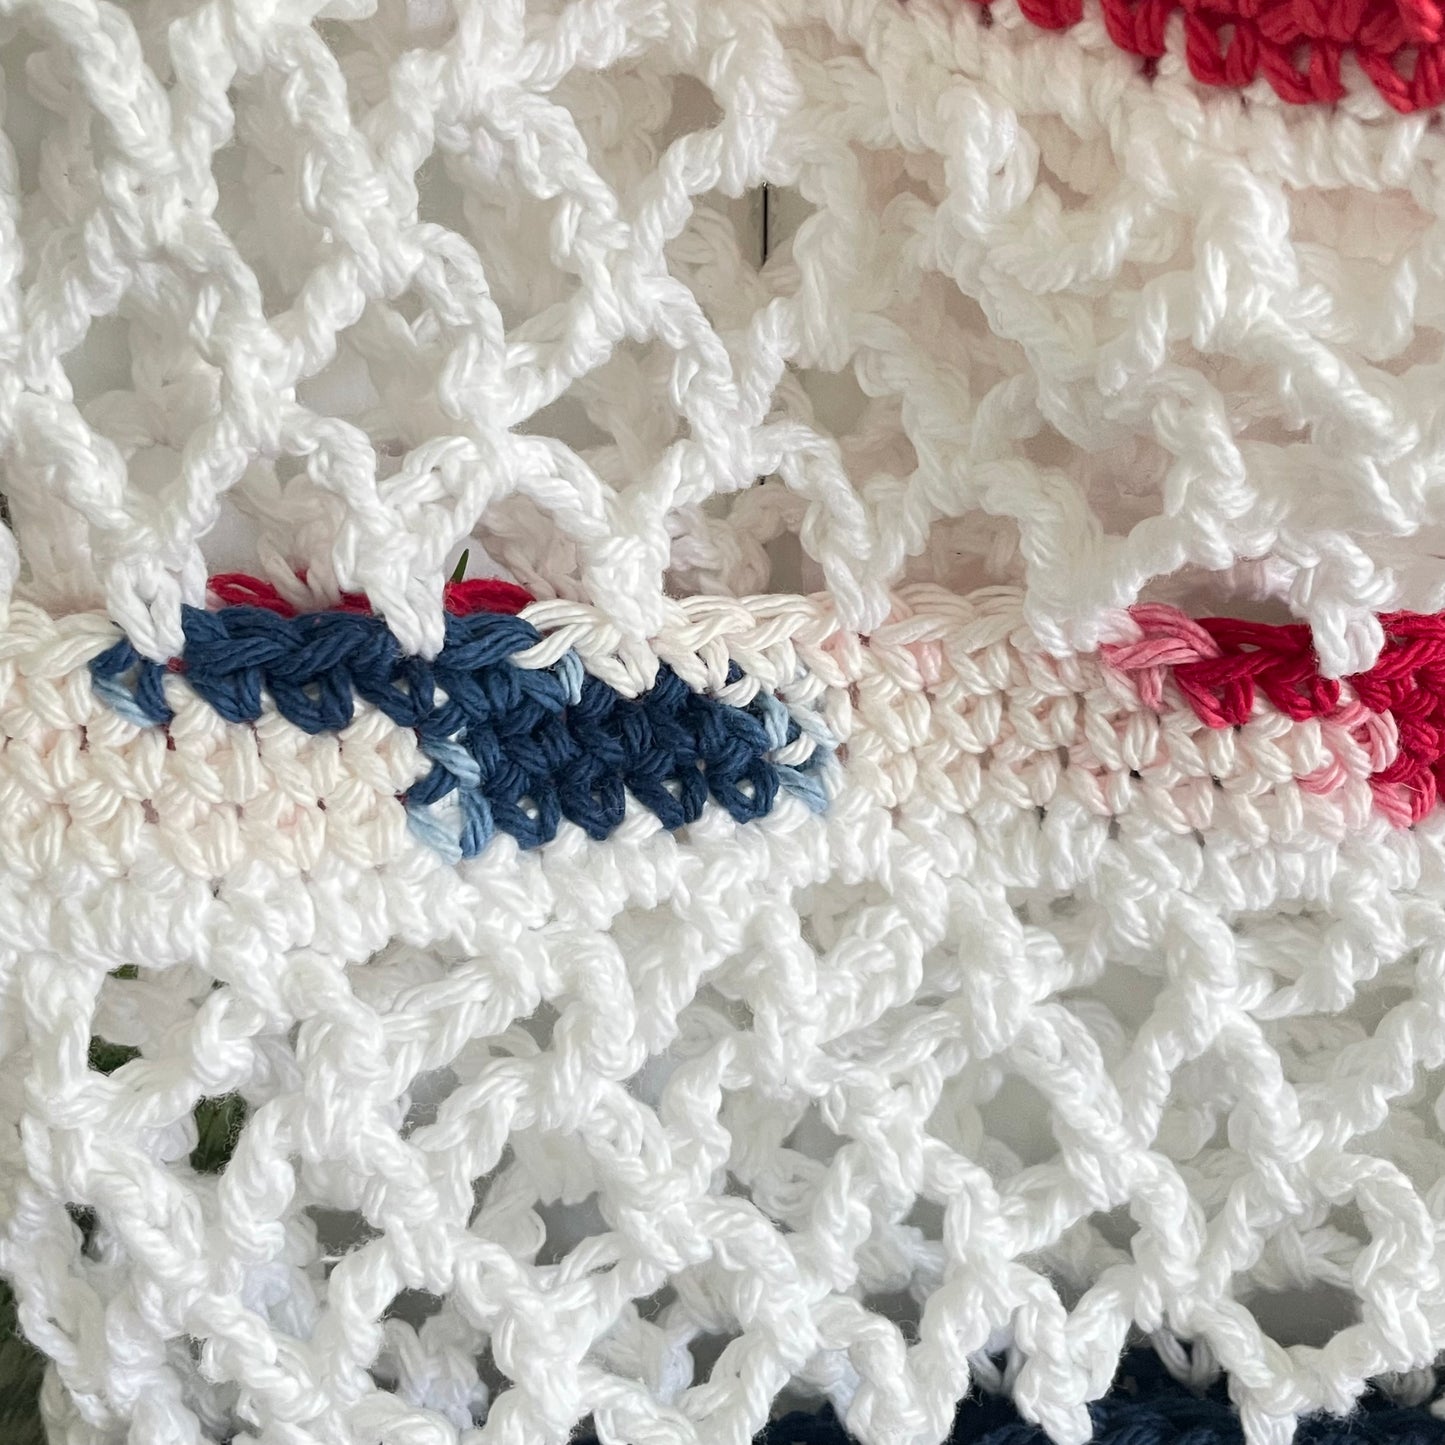 Red White Navy Blue Bottom Tote Bag Purse Cotton Reusable Boho Multicolor Hand Crocheted Knit Coastal Resort Beach